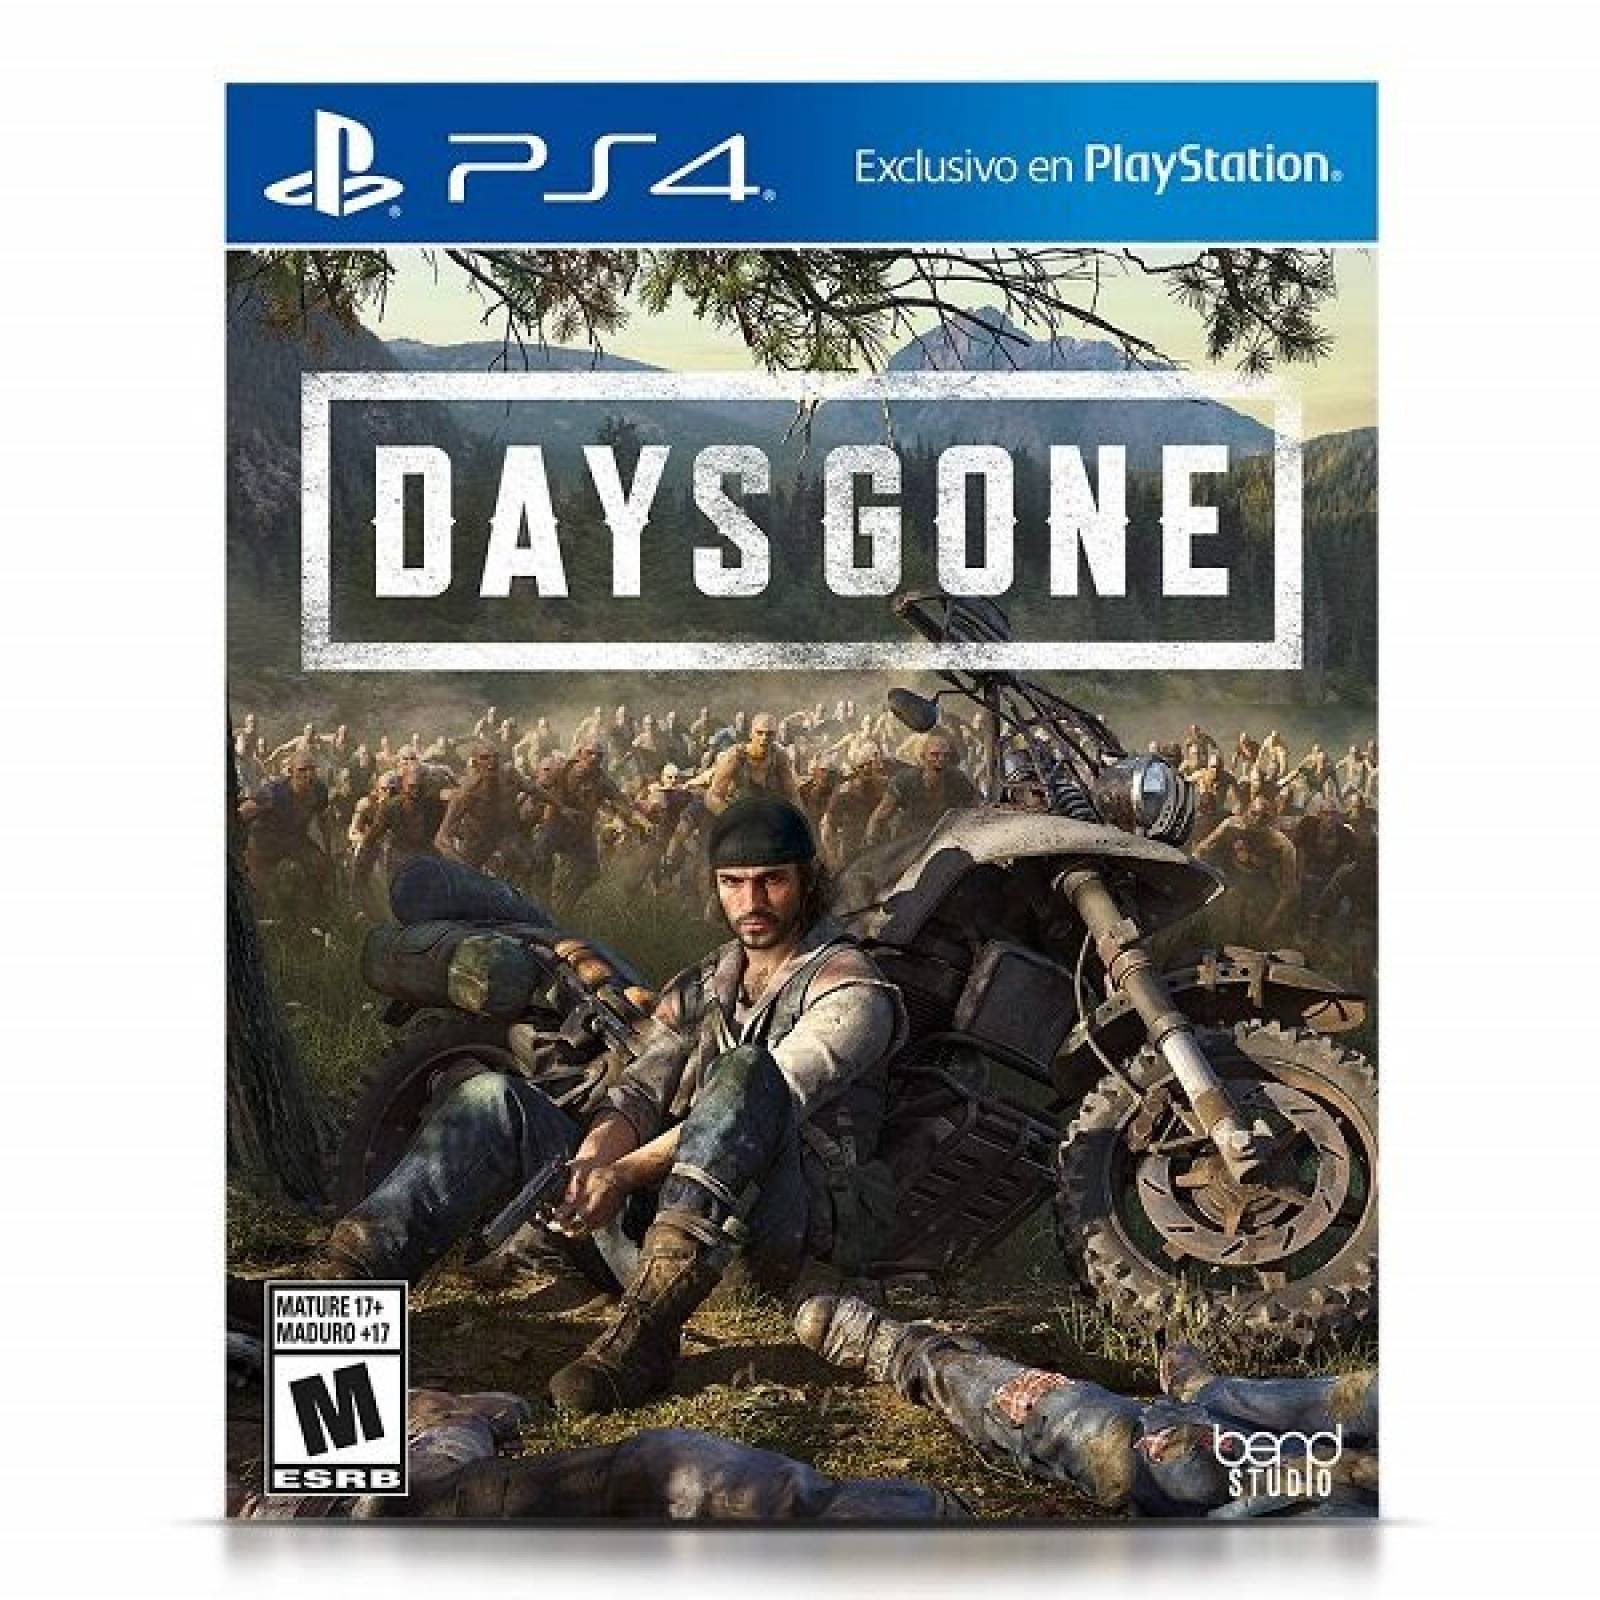 PS4 Sony 1TB Bundle Days Gone + Detroit + Rainbow HDR